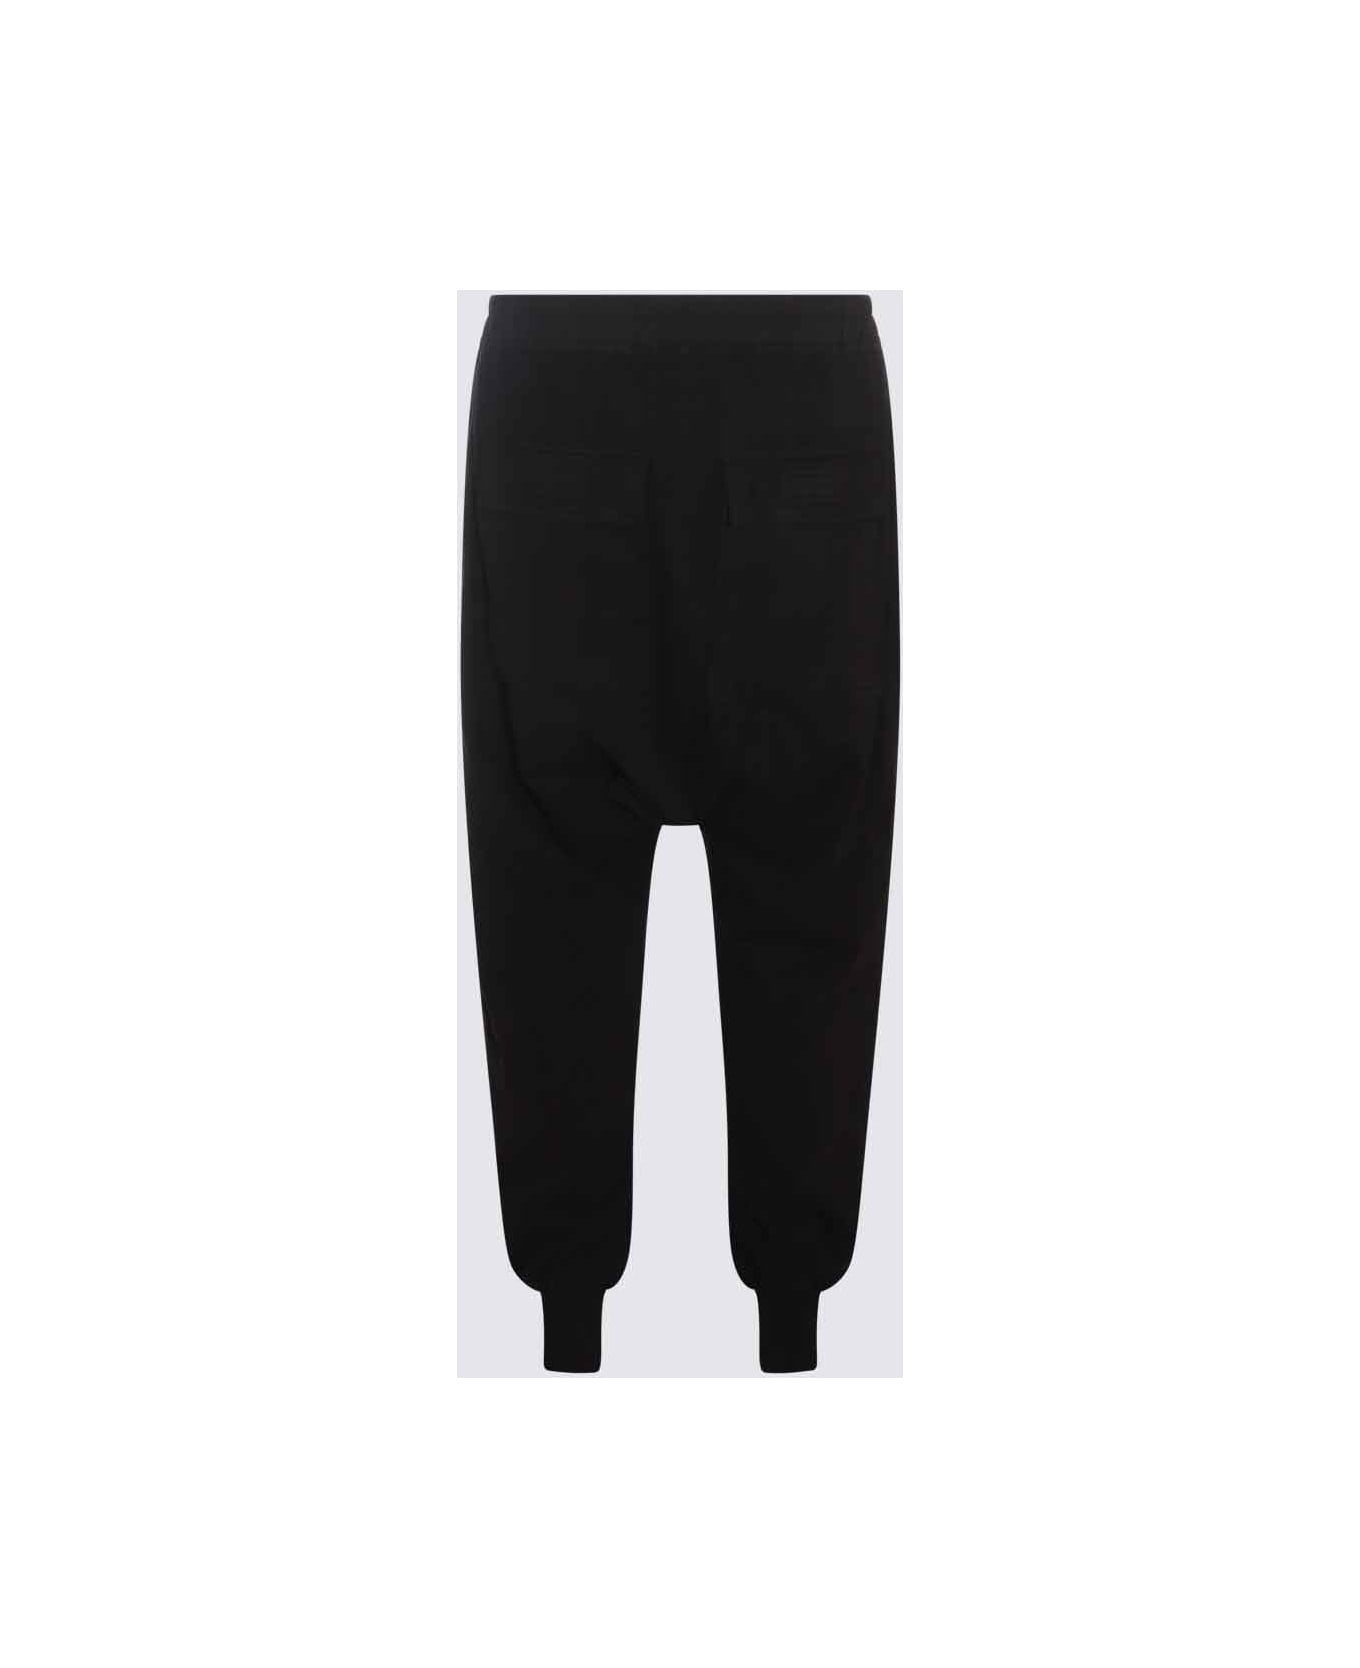 DRKSHDW Black Cotton Pants - Black スウェットパンツ